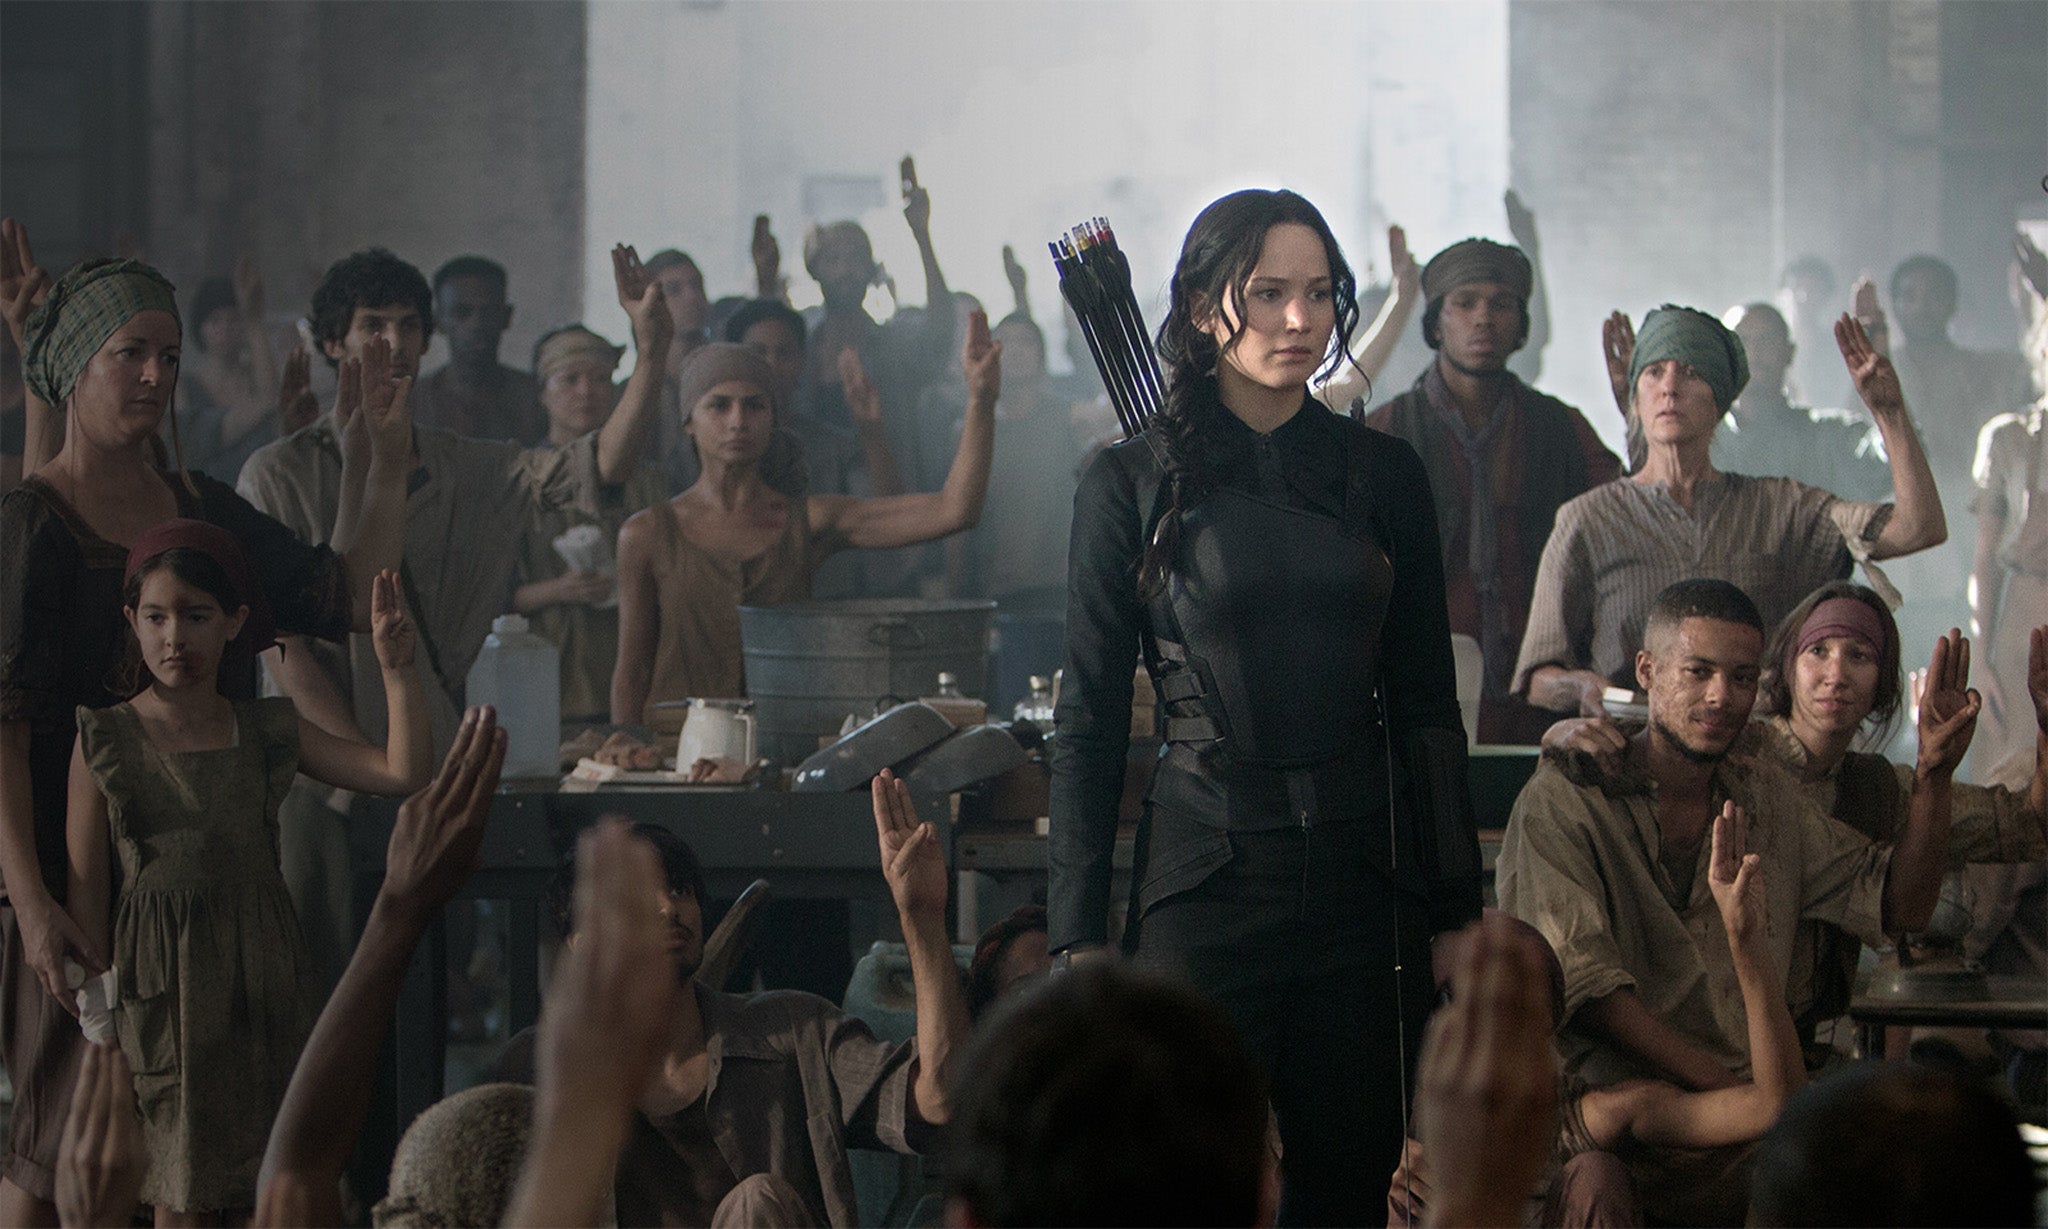 Jennifer Lawrence leads the Hunger Games rebellion as Katniss Everdeen in Mockingjay Part 1